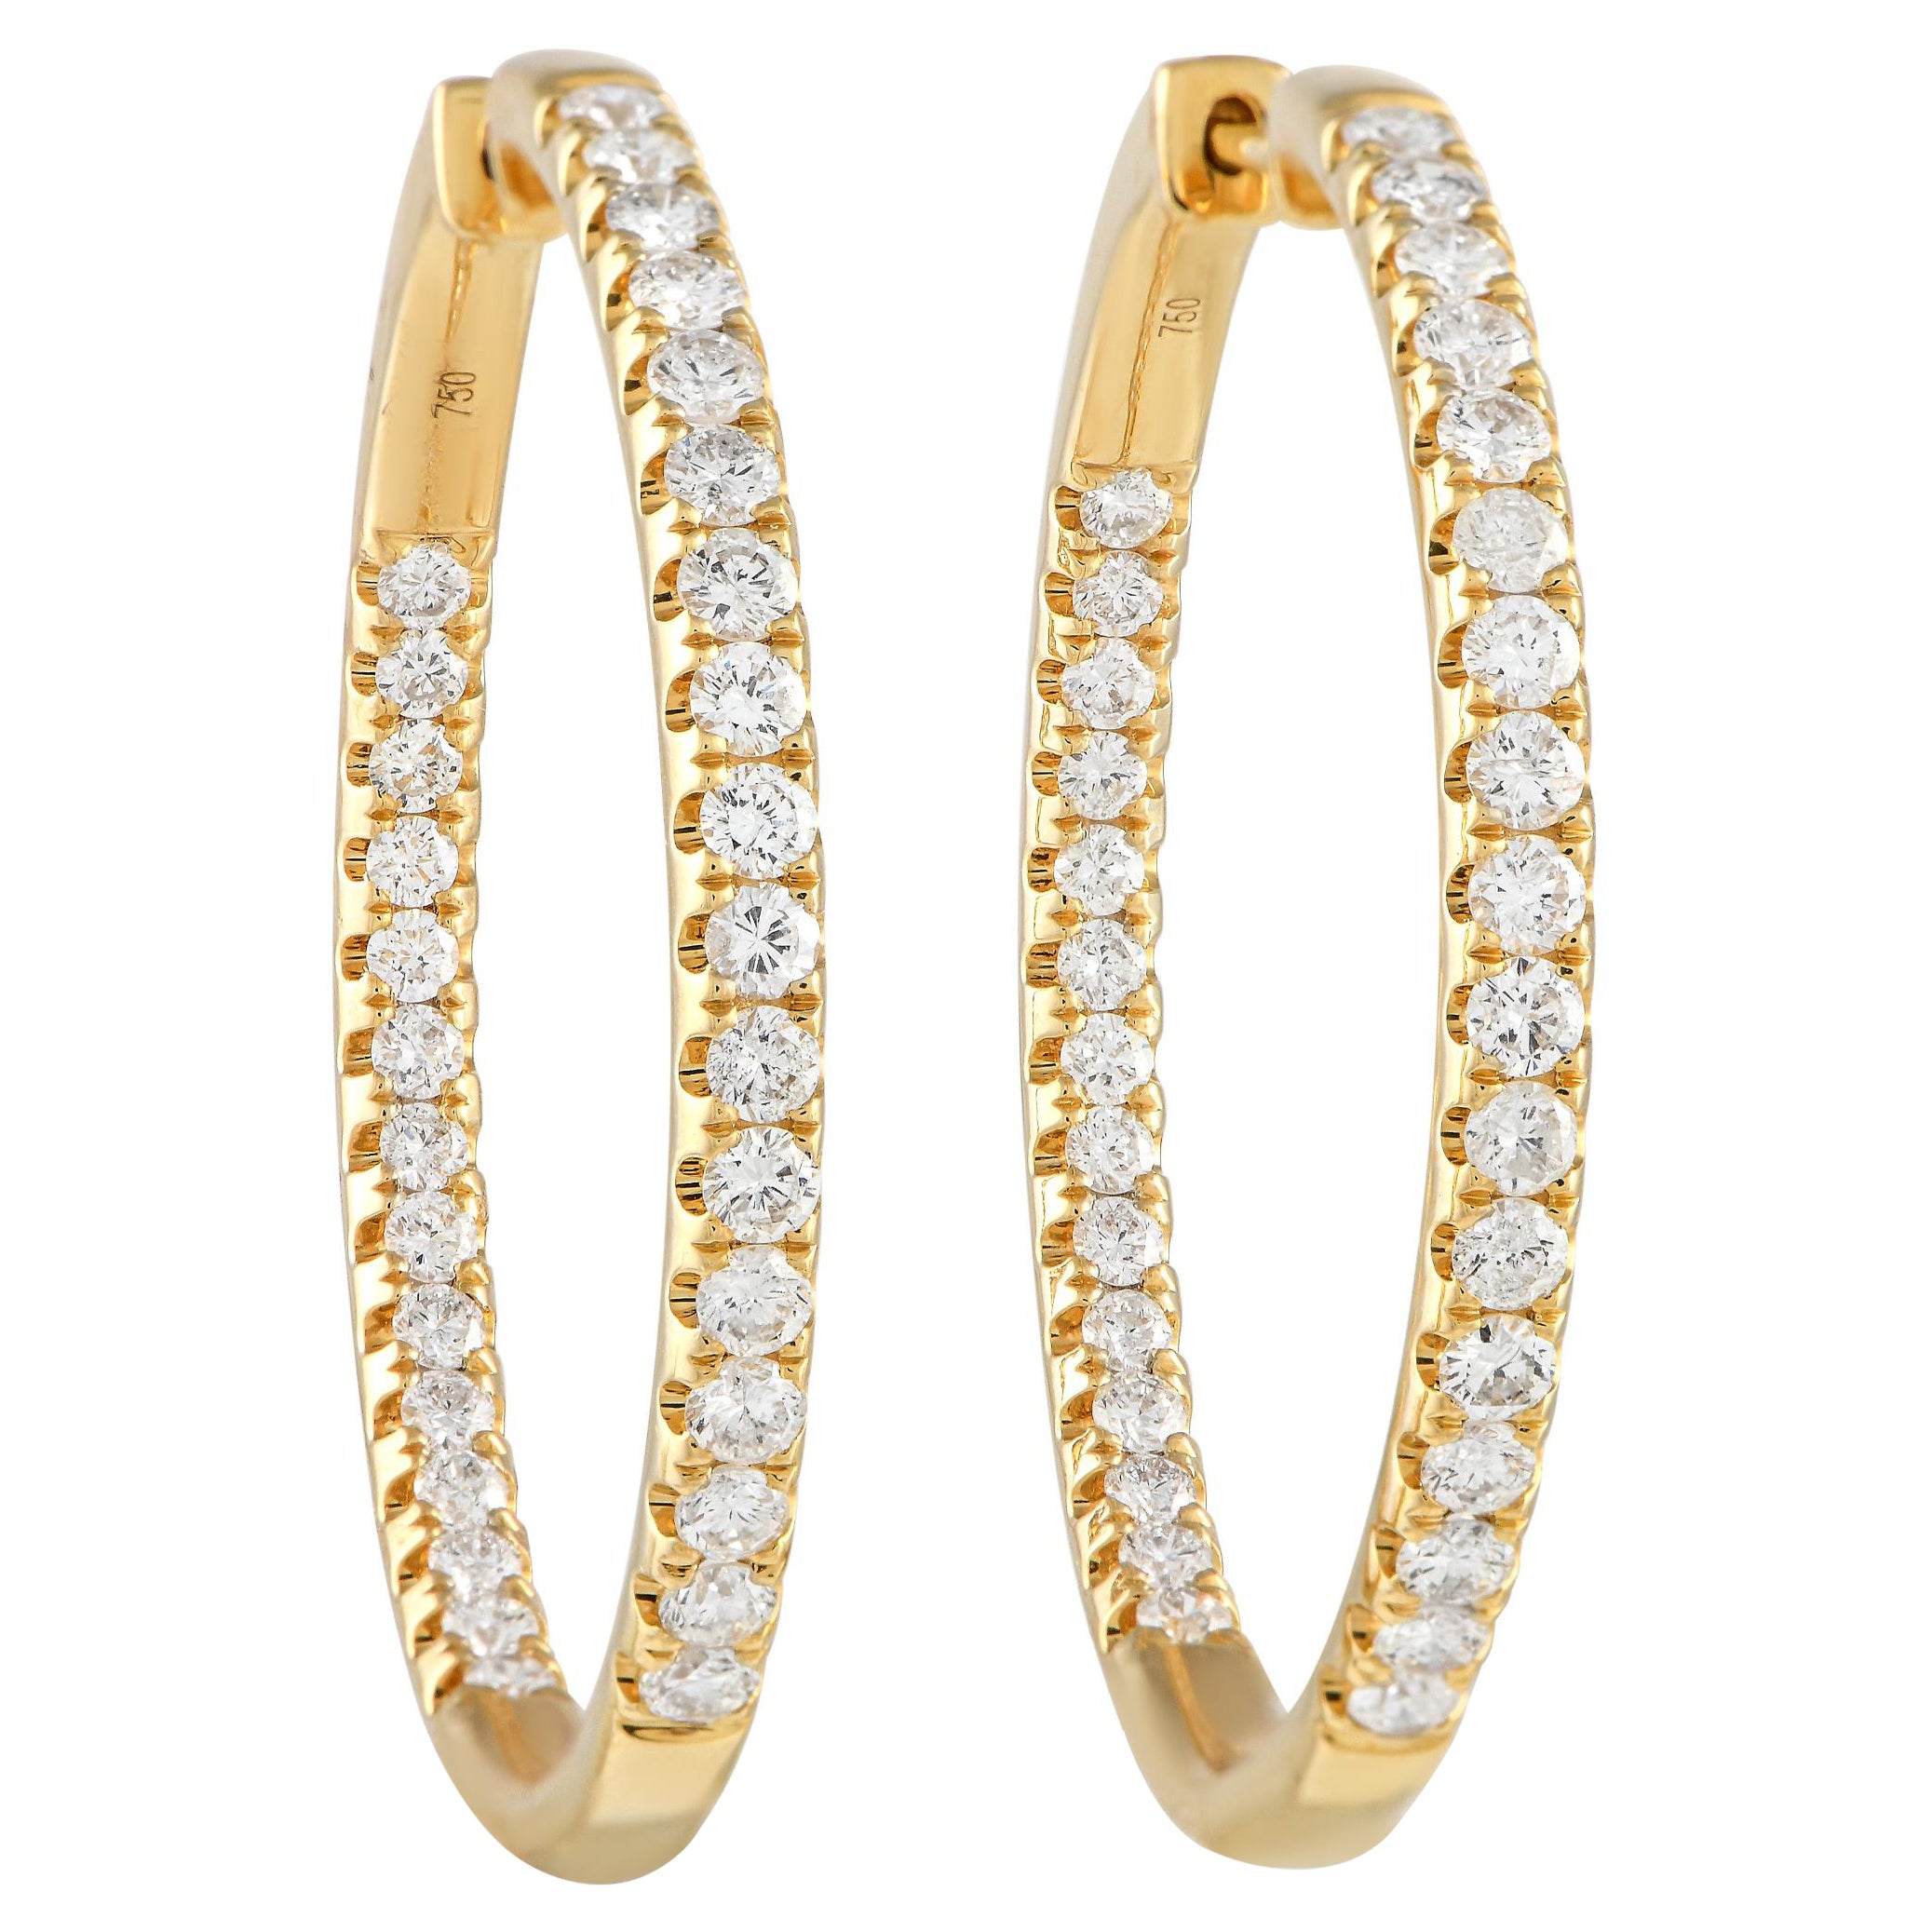 LB Exclusive 18Karat  Yellow Gold 5.0Carat Diamond Inside-Out Hoop Earrings